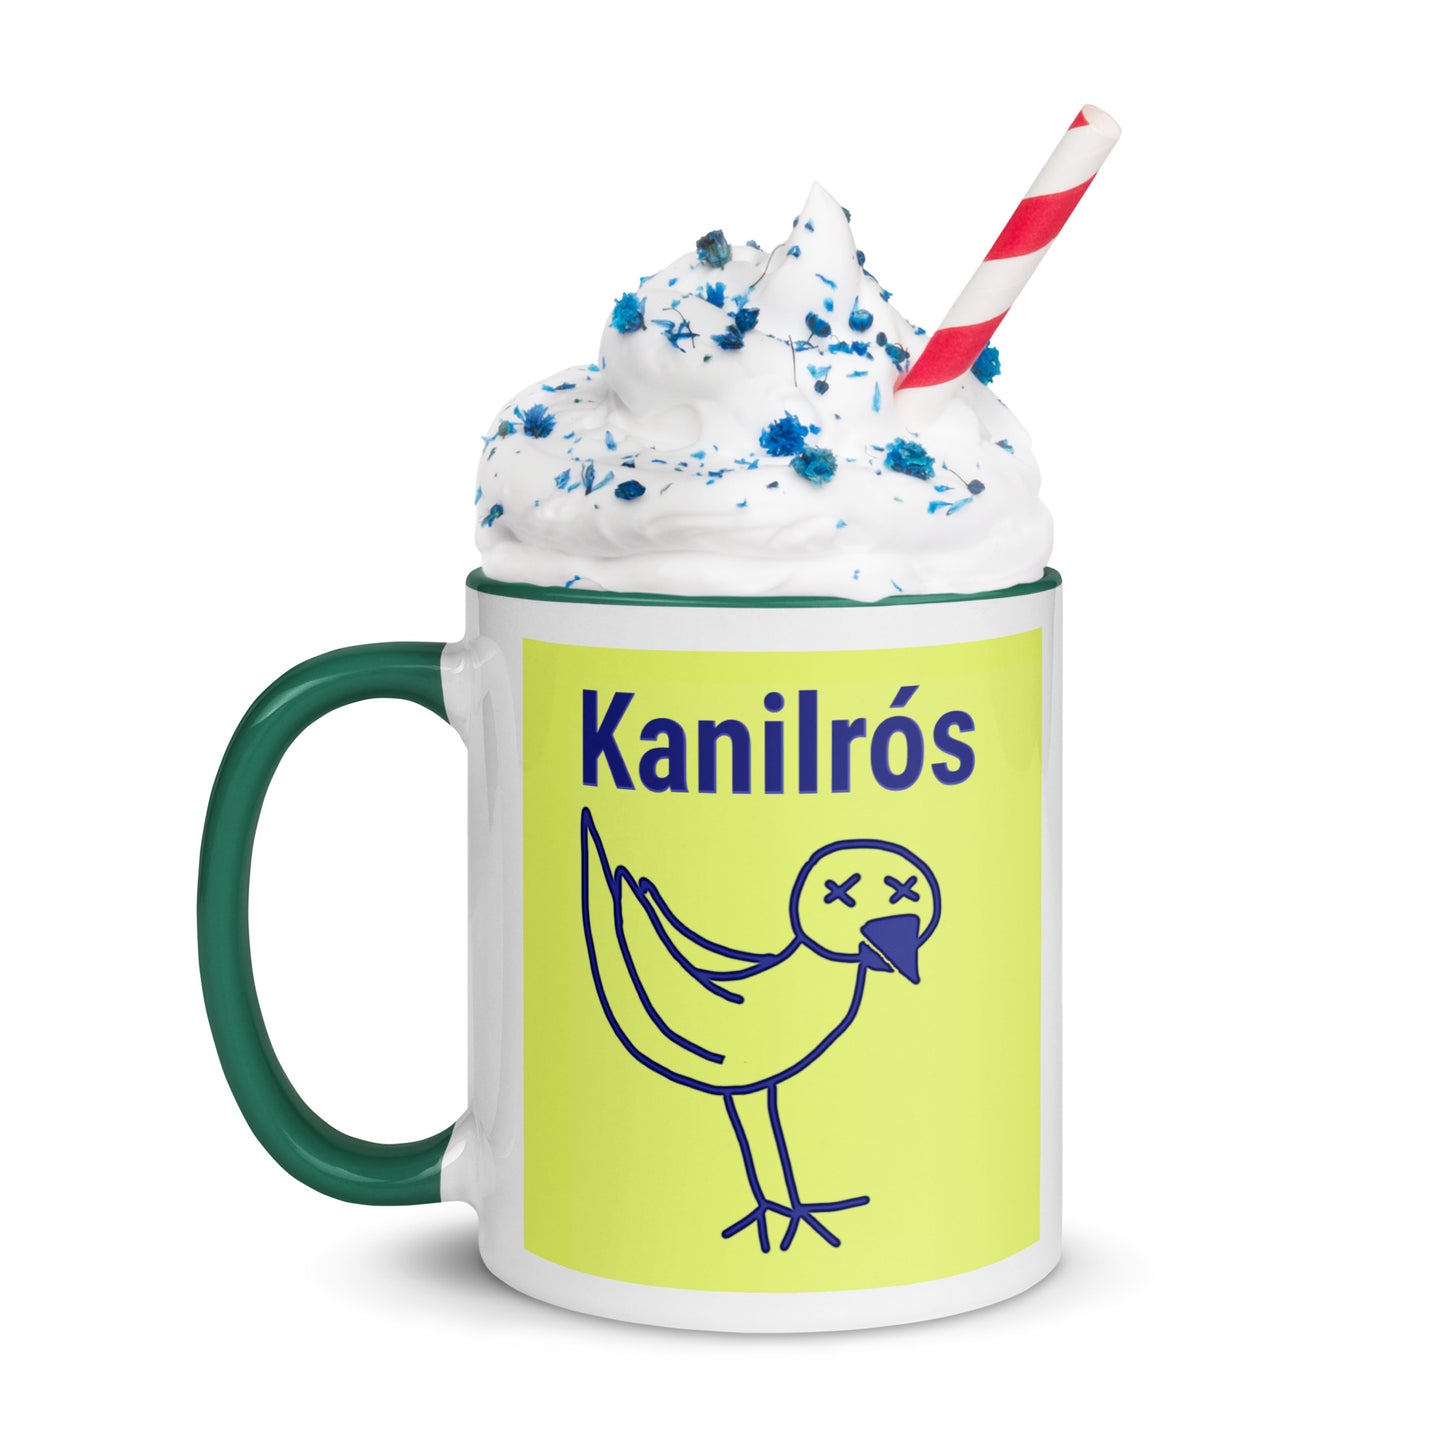 Kanilros Bird Mug With Color Inside